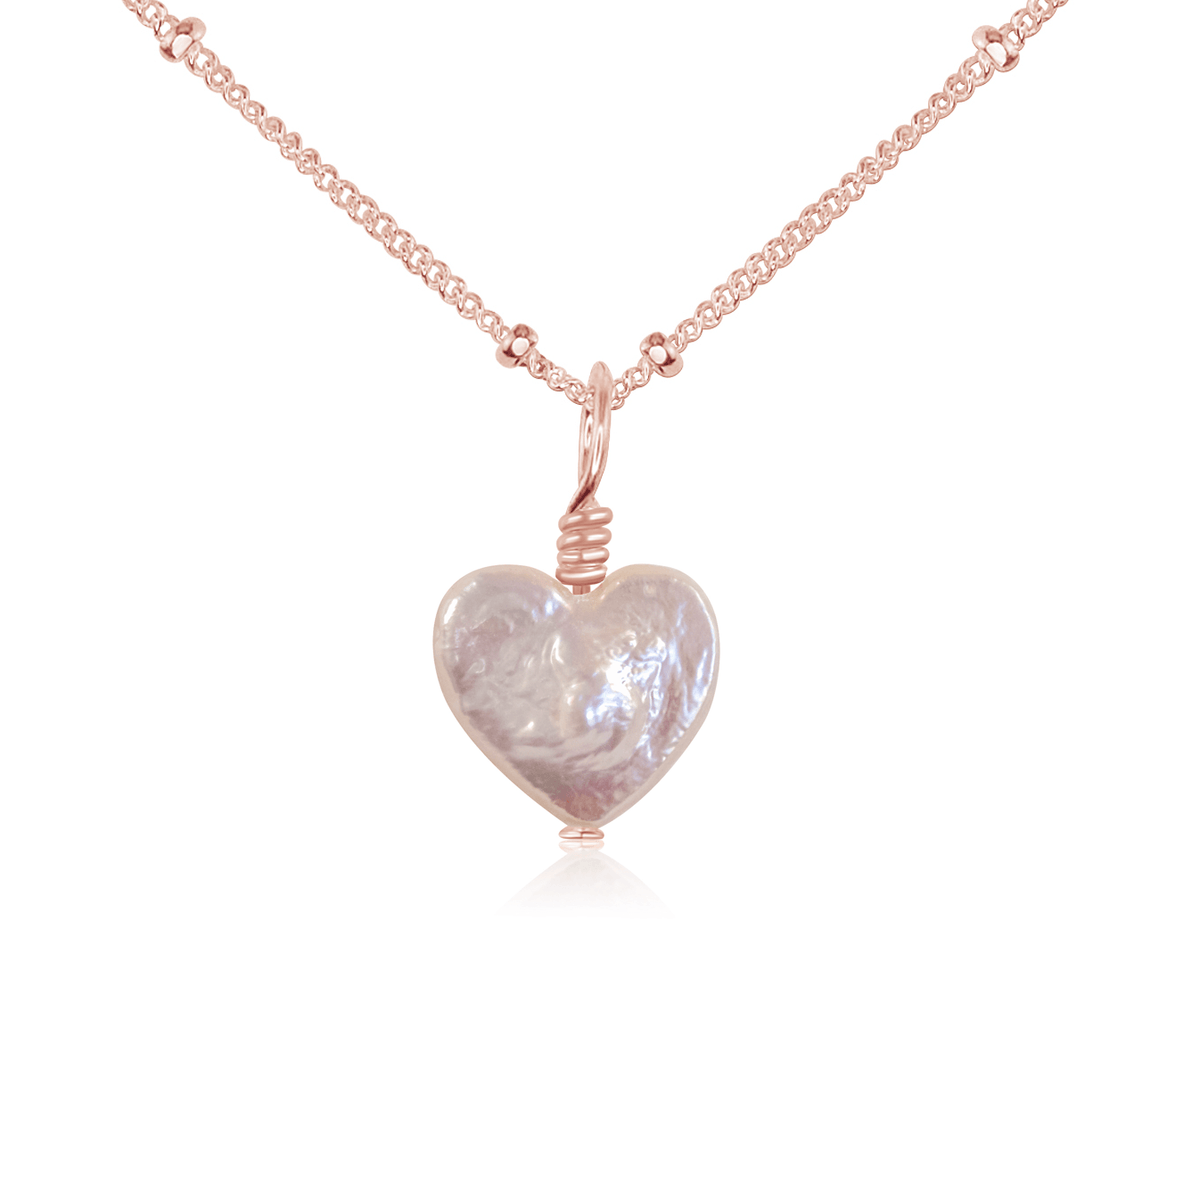 Freshwater Pearl Heart Pendant Necklace - Freshwater Pearl Heart Pendant Necklace - 14k Rose Gold Fill / Satellite - Luna Tide Handmade Crystal Jewellery